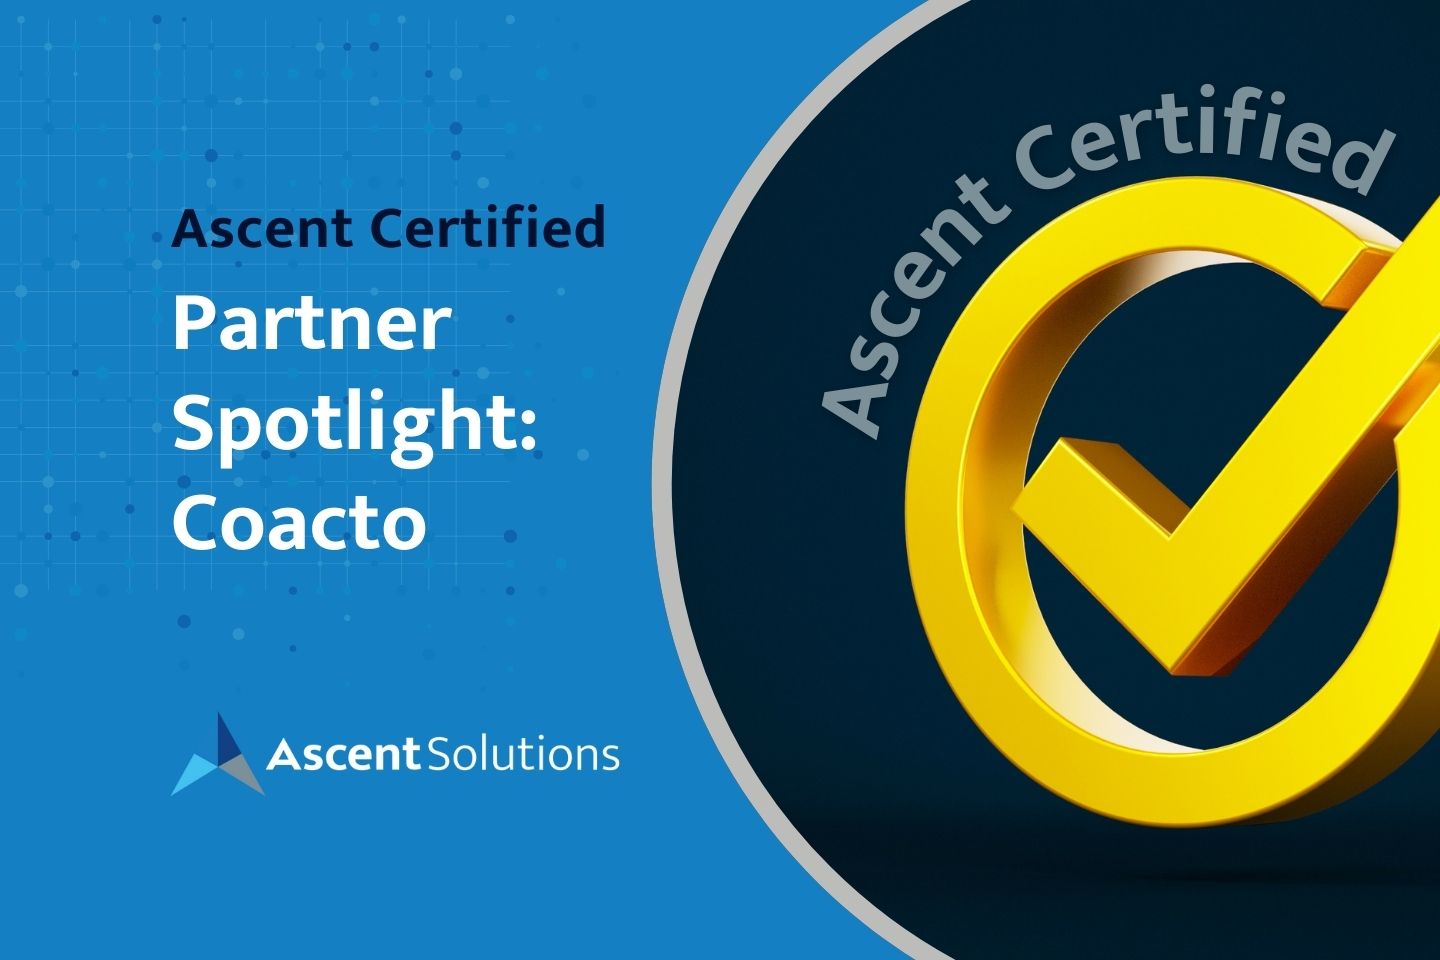 Ascent Certified Partner Spotlight Coacto